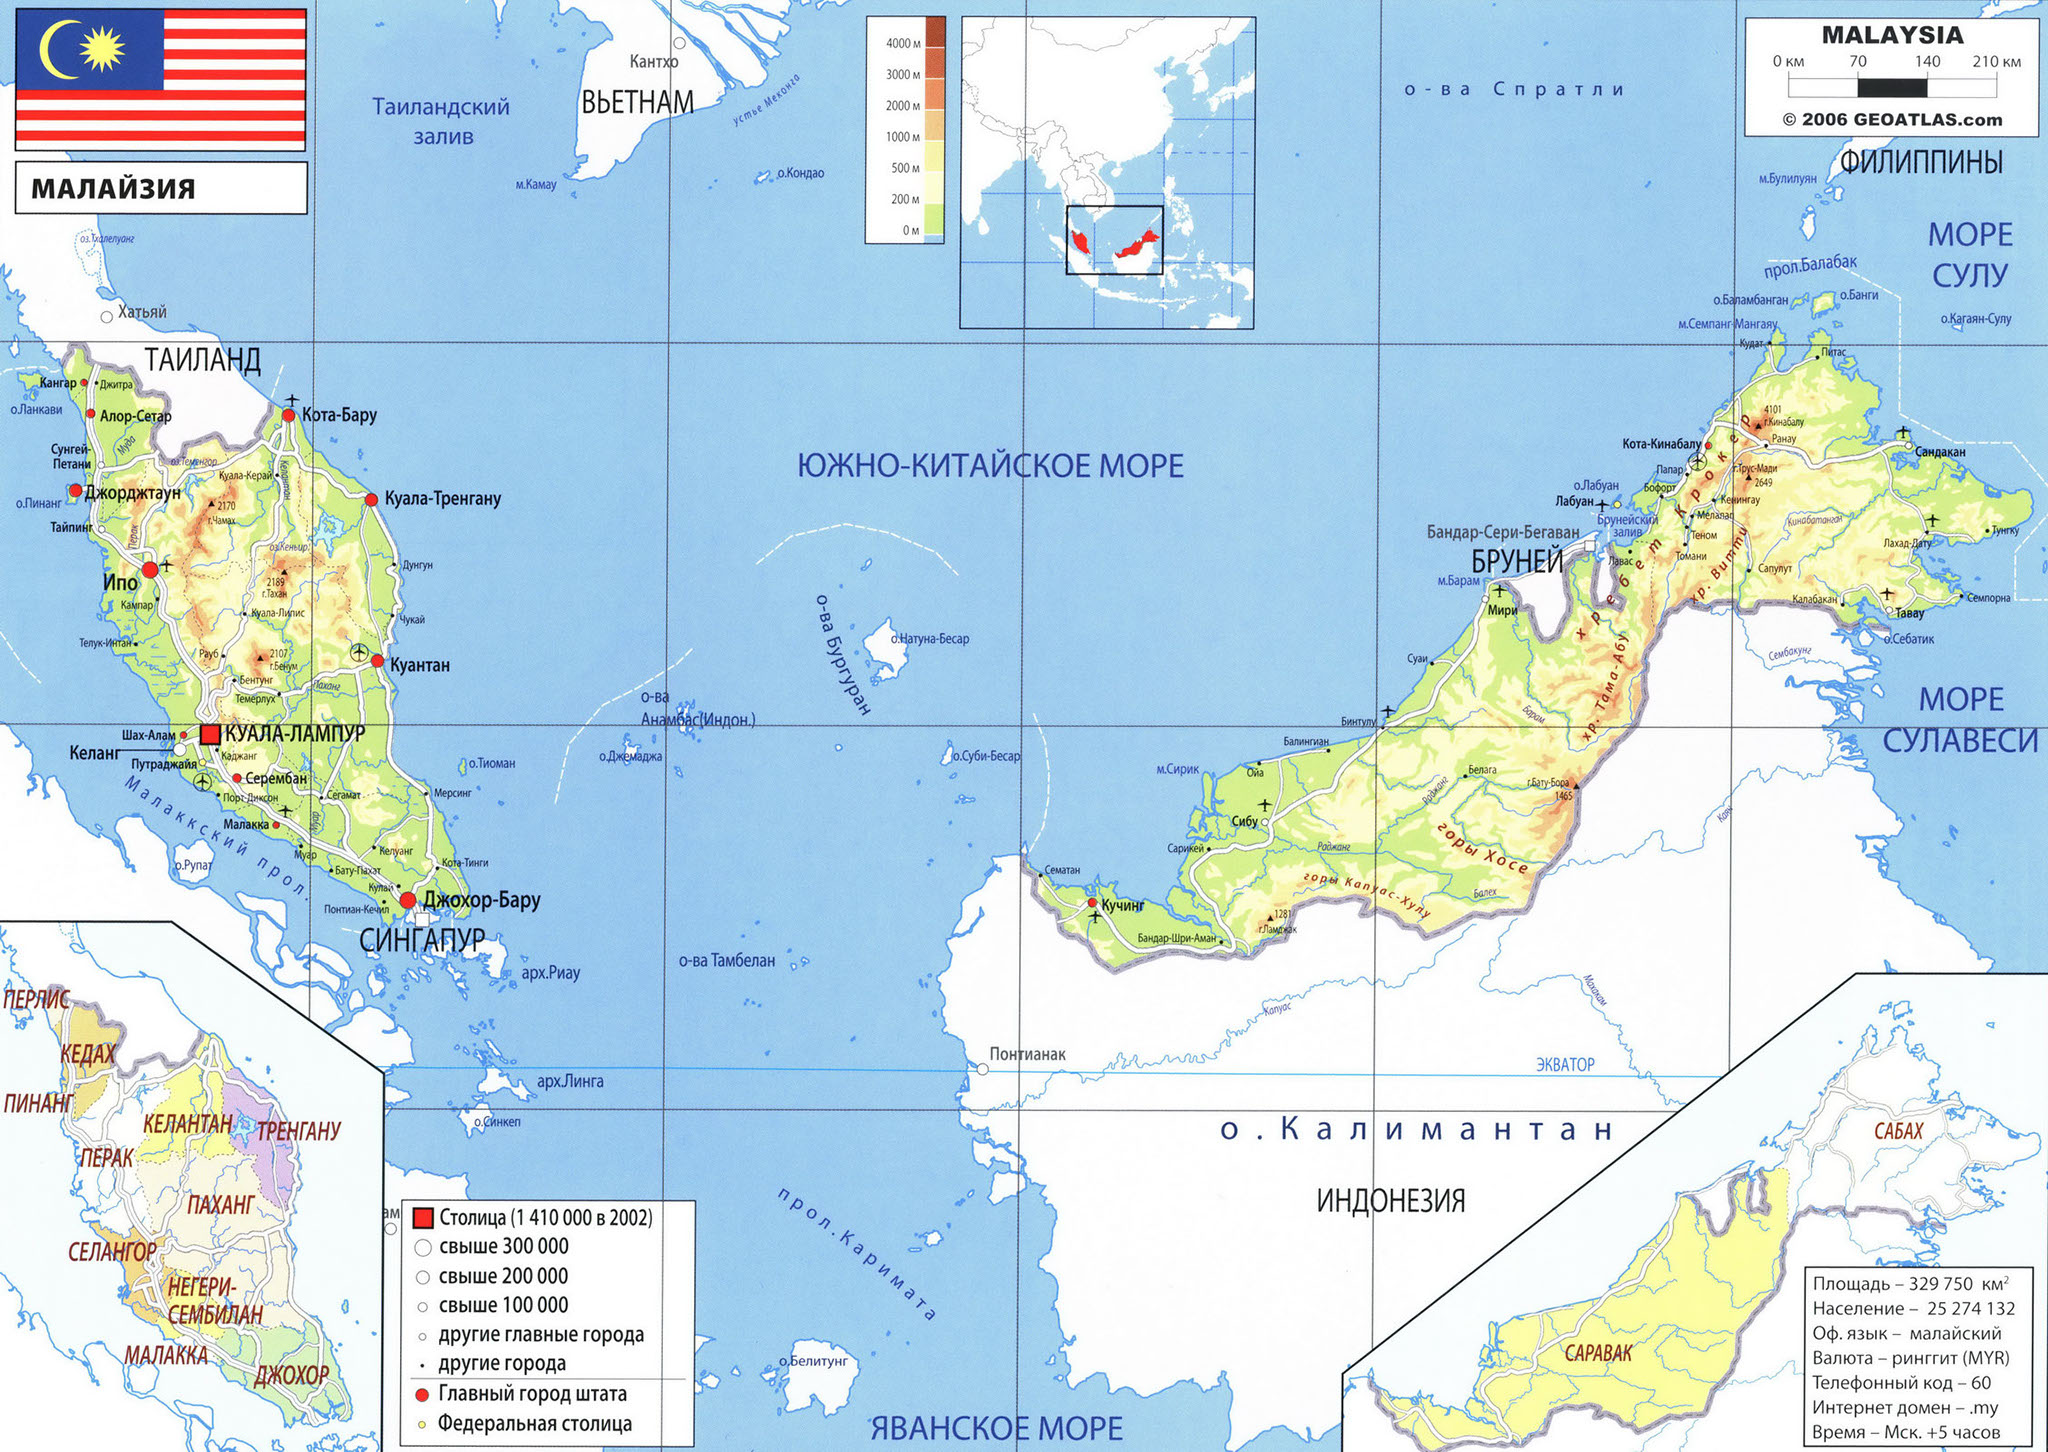 Карта малайзия на русском языке. Карта Малайзии географическая. Карта Малайзии с островами на русском языке. Административная карта Малайзии.